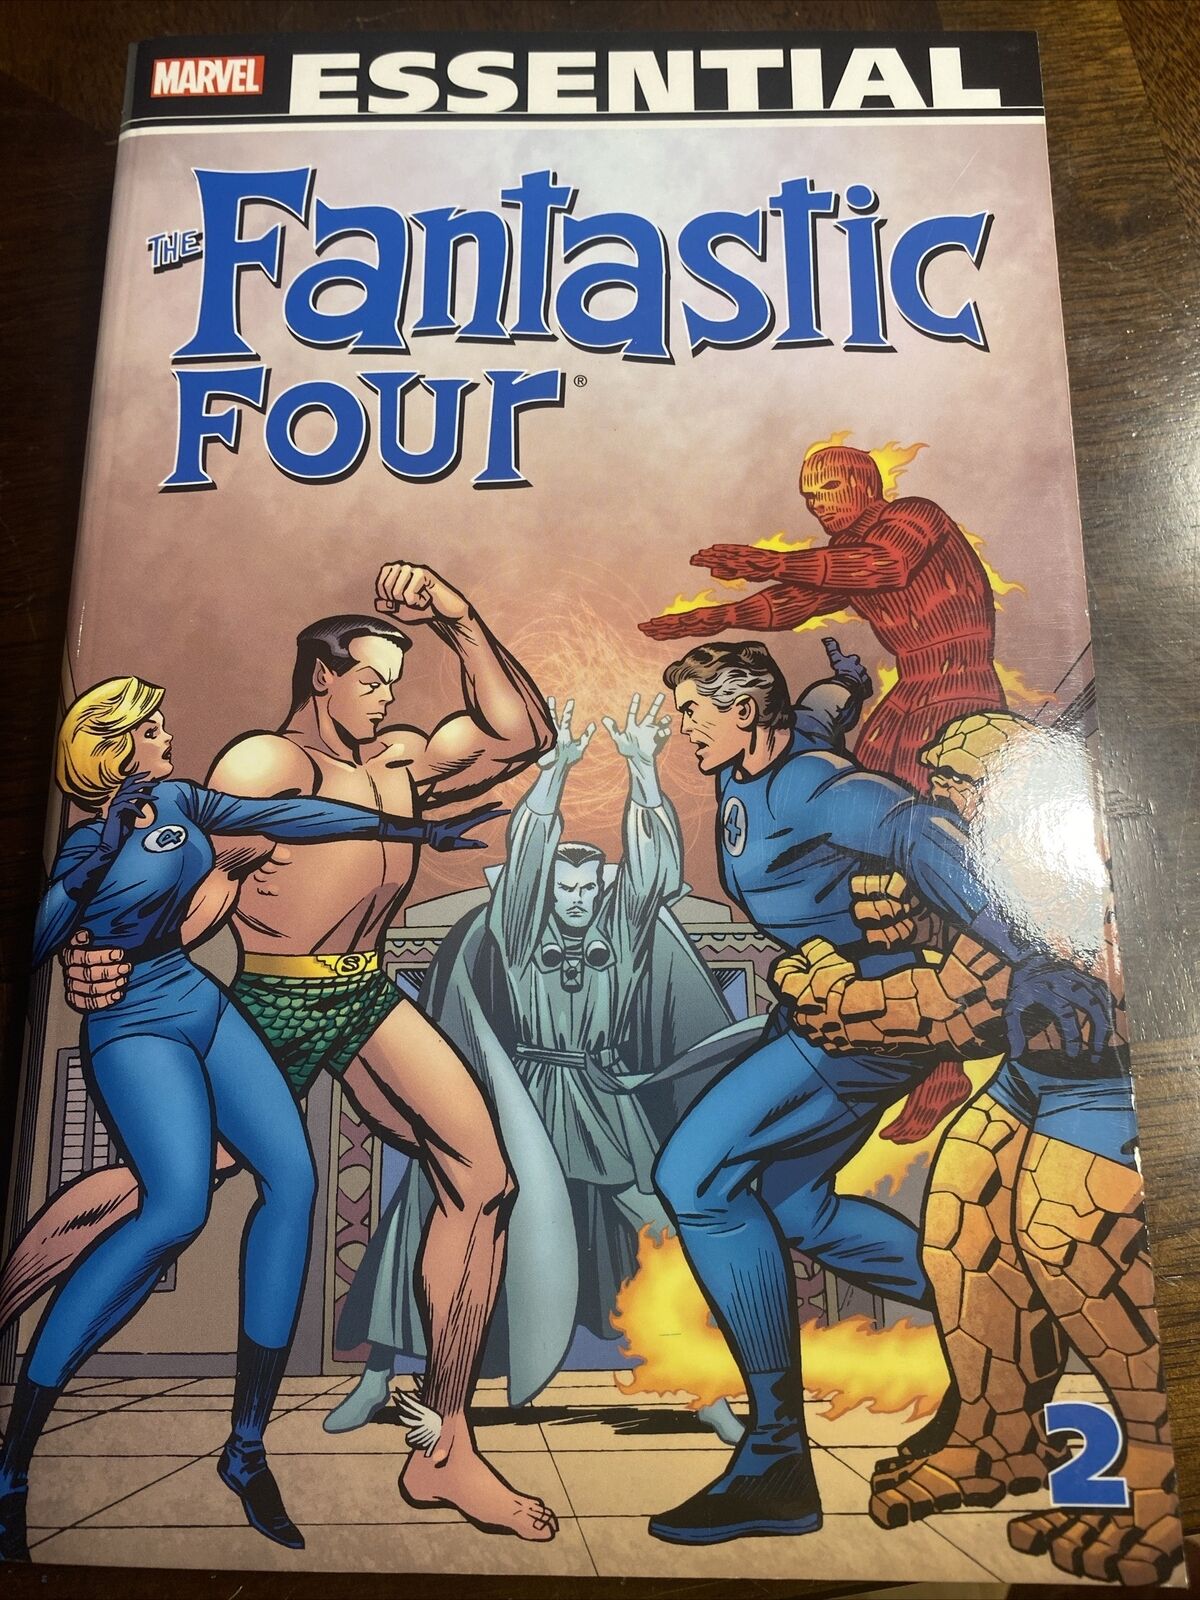 Marvel Essential Fantastic Four Vol. 2 #21-40 Annual 2 TPB - 2011